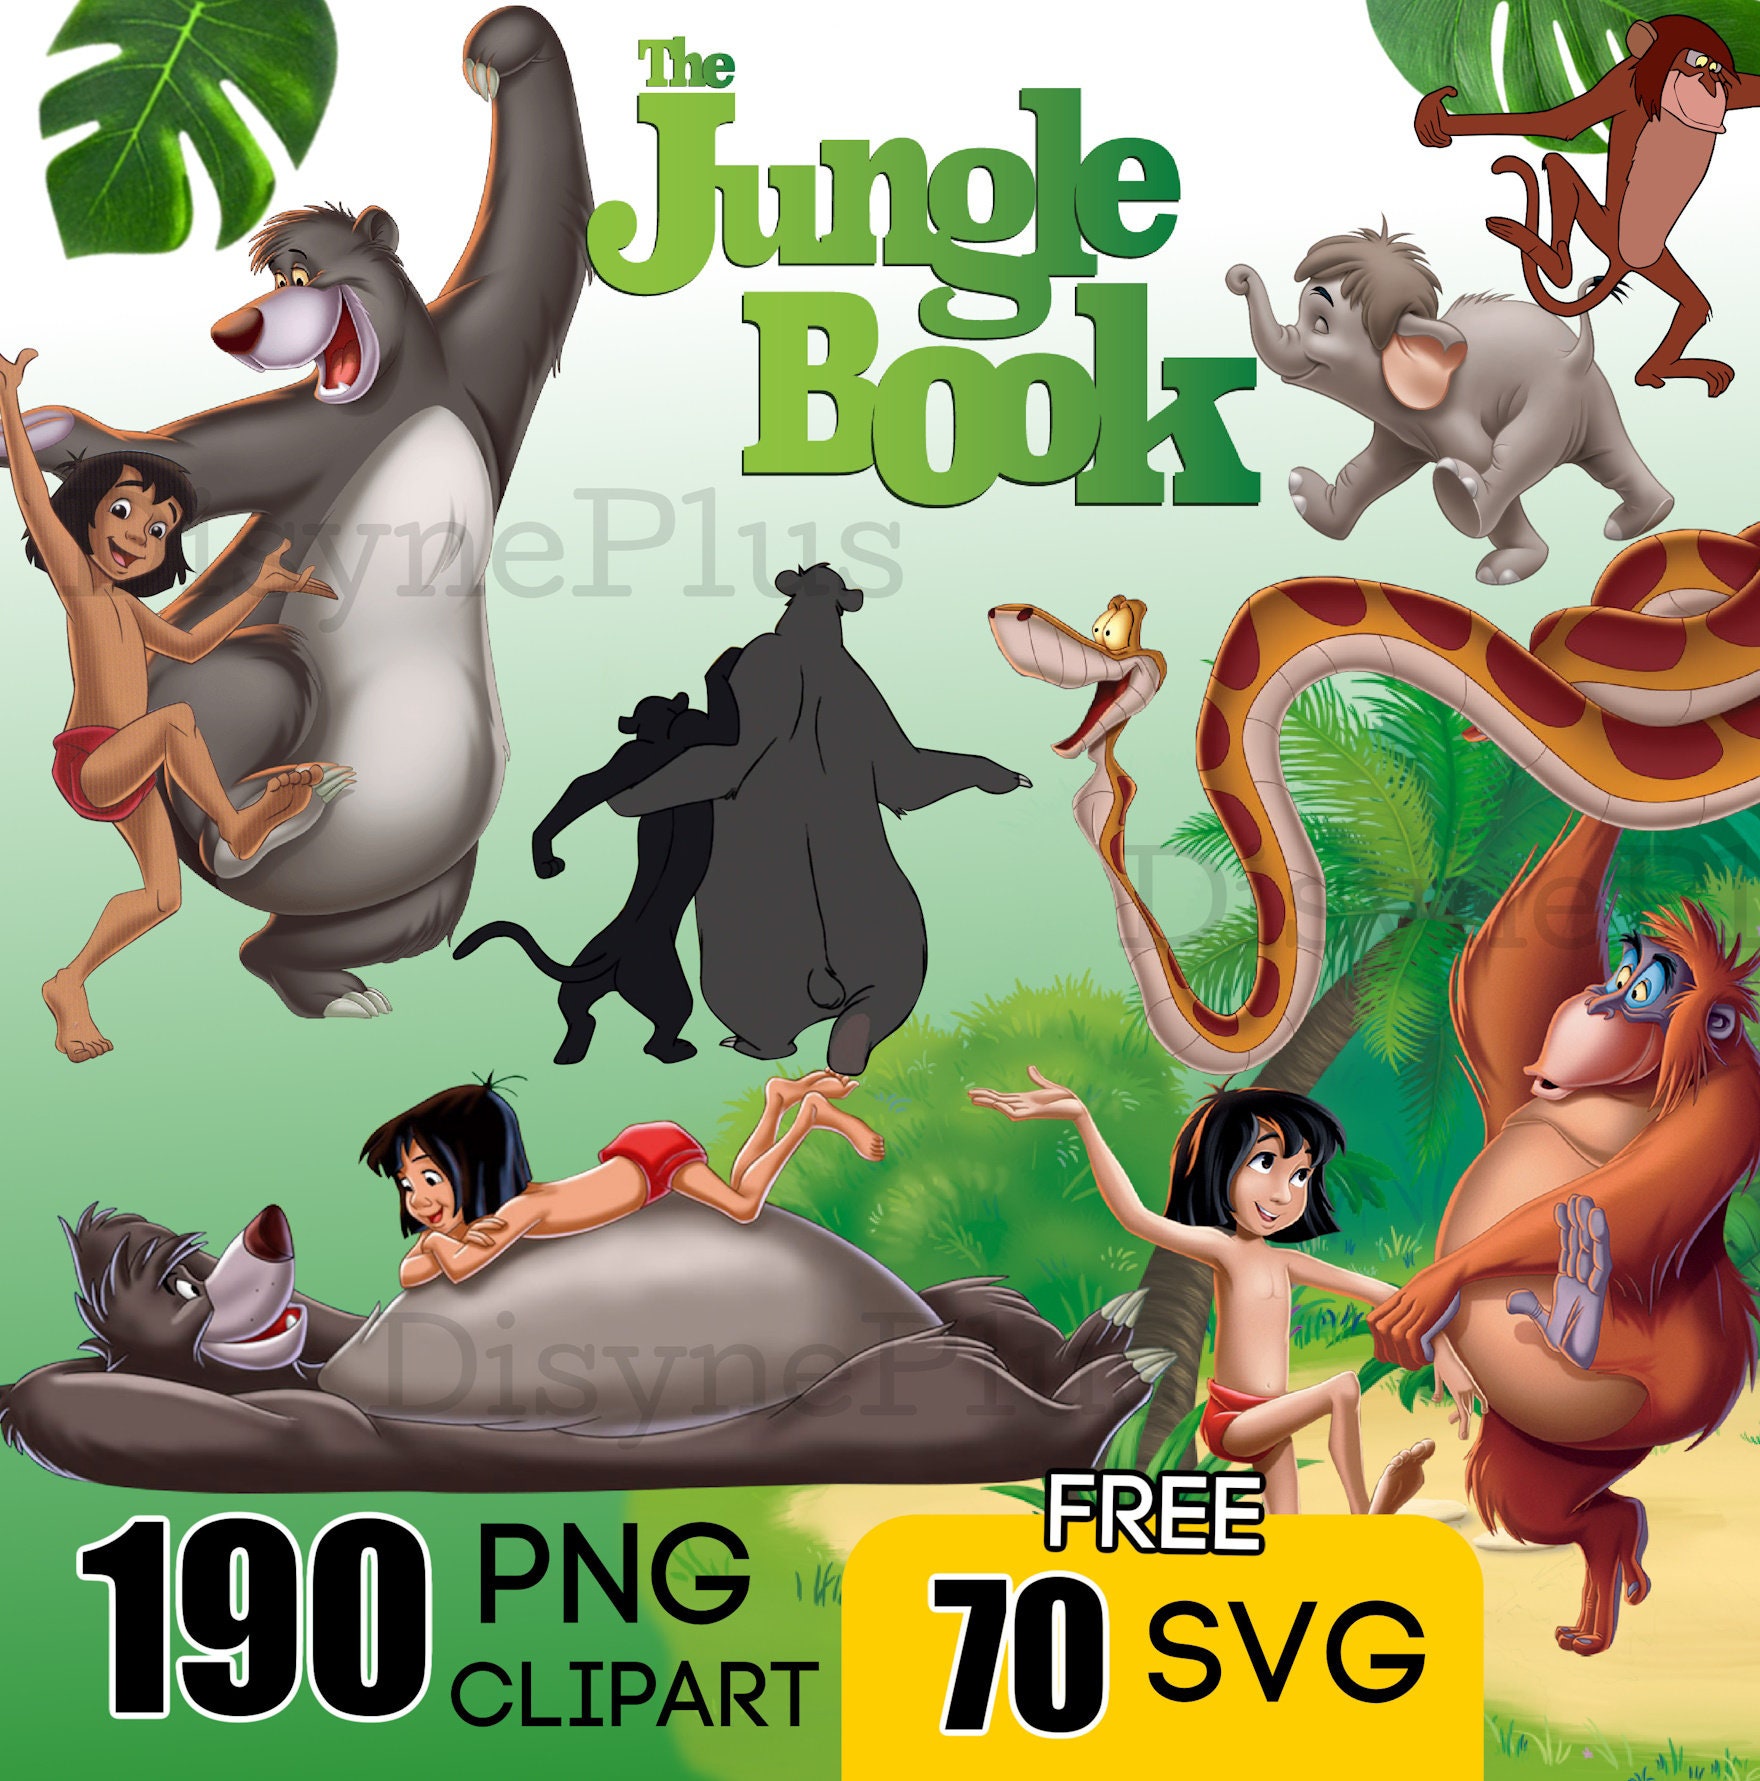 Jungle Book Movie image